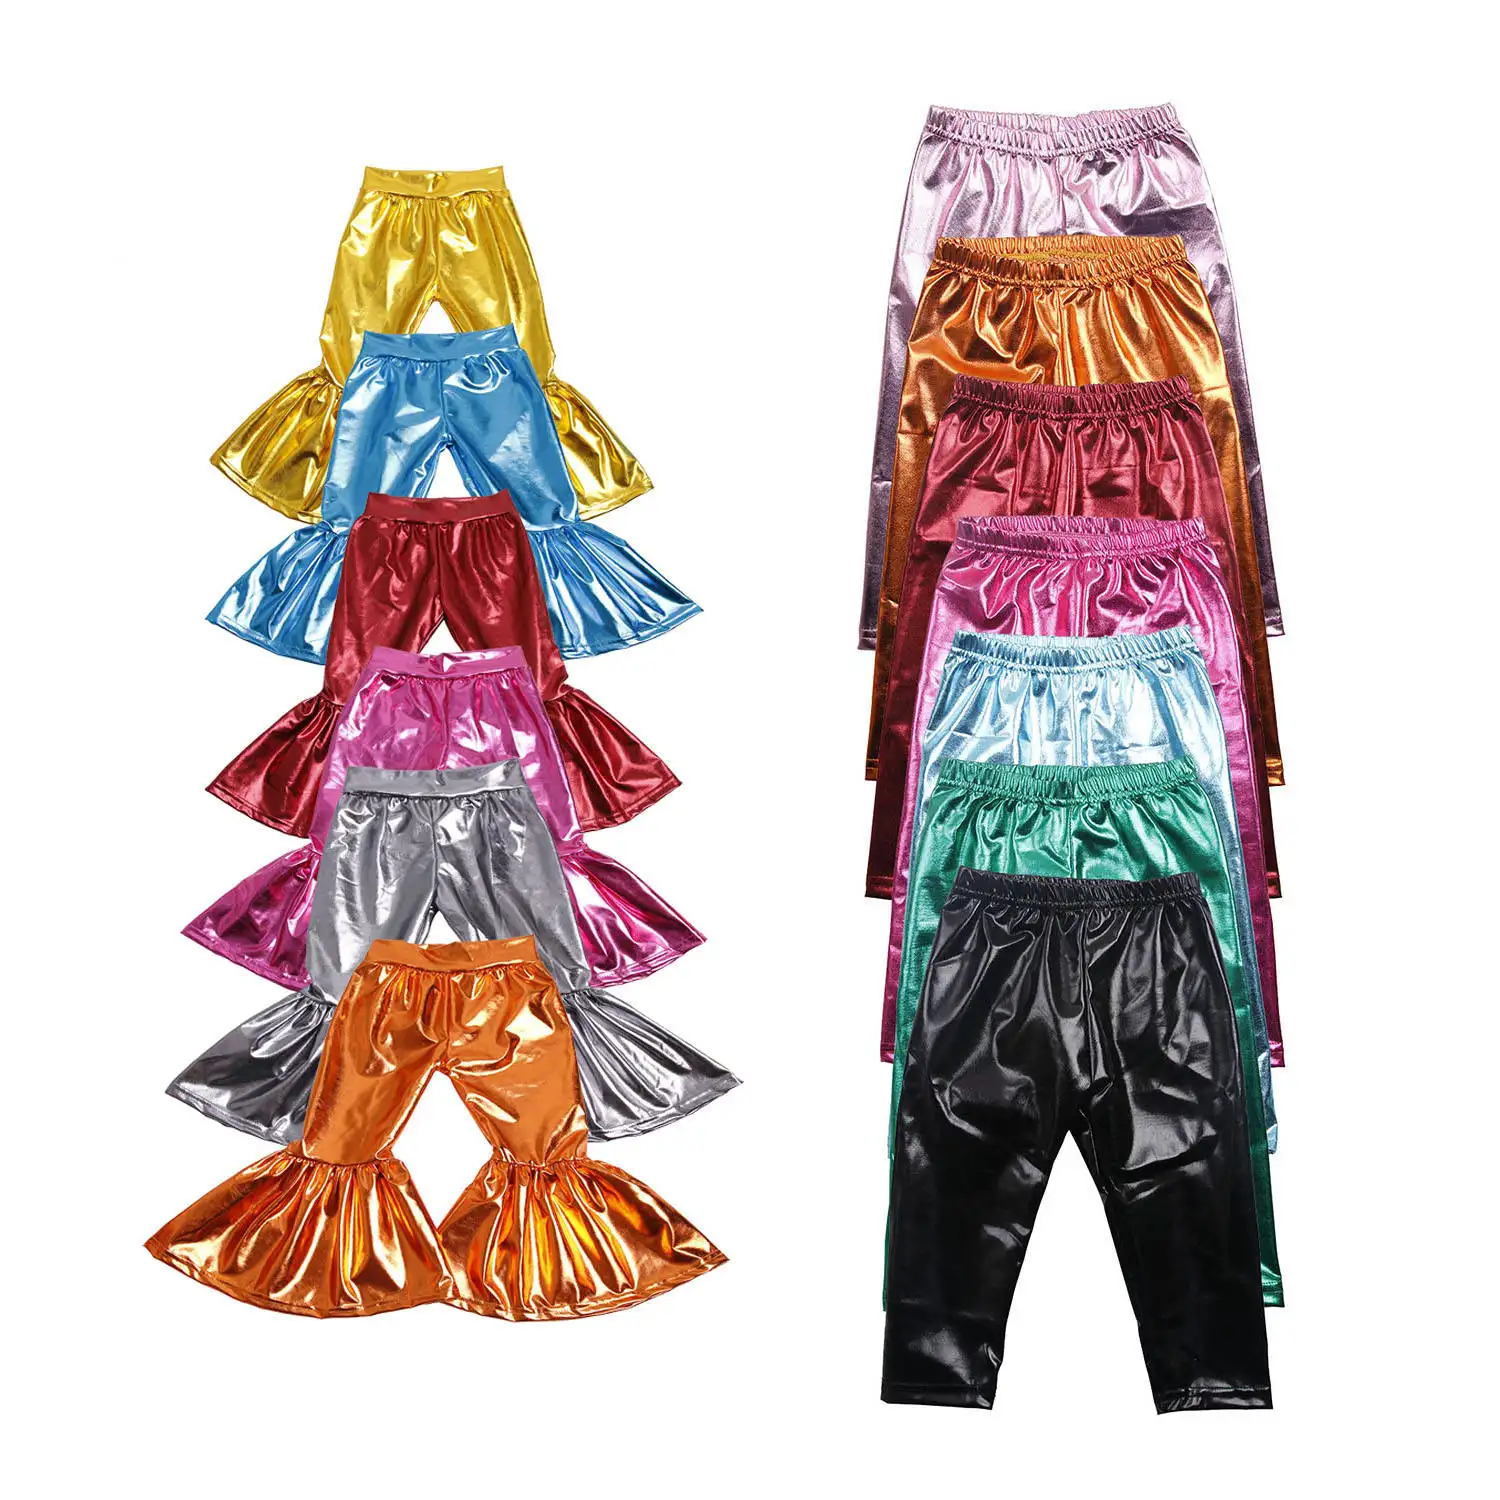 Wholesale Children's PU Leather Pants Autumn Winter Girls Leggings Plus Kids Leggings Kids Clothing Pants